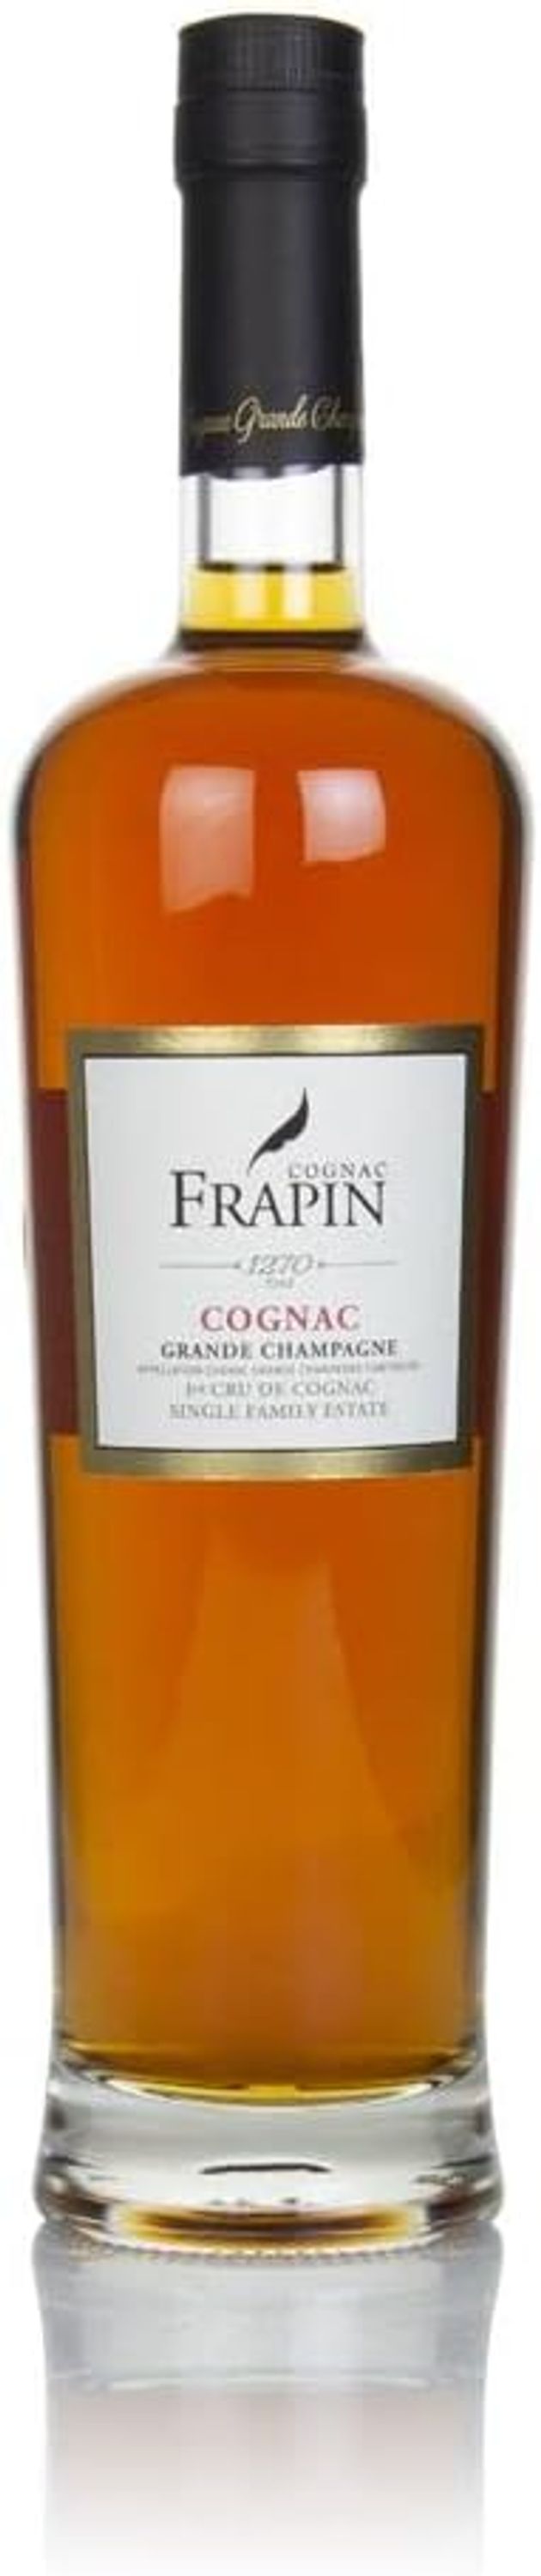 Frapin 1270 Grande Champagne 0,7l, alk. 40 tilavuusprosenttia, Cognac France